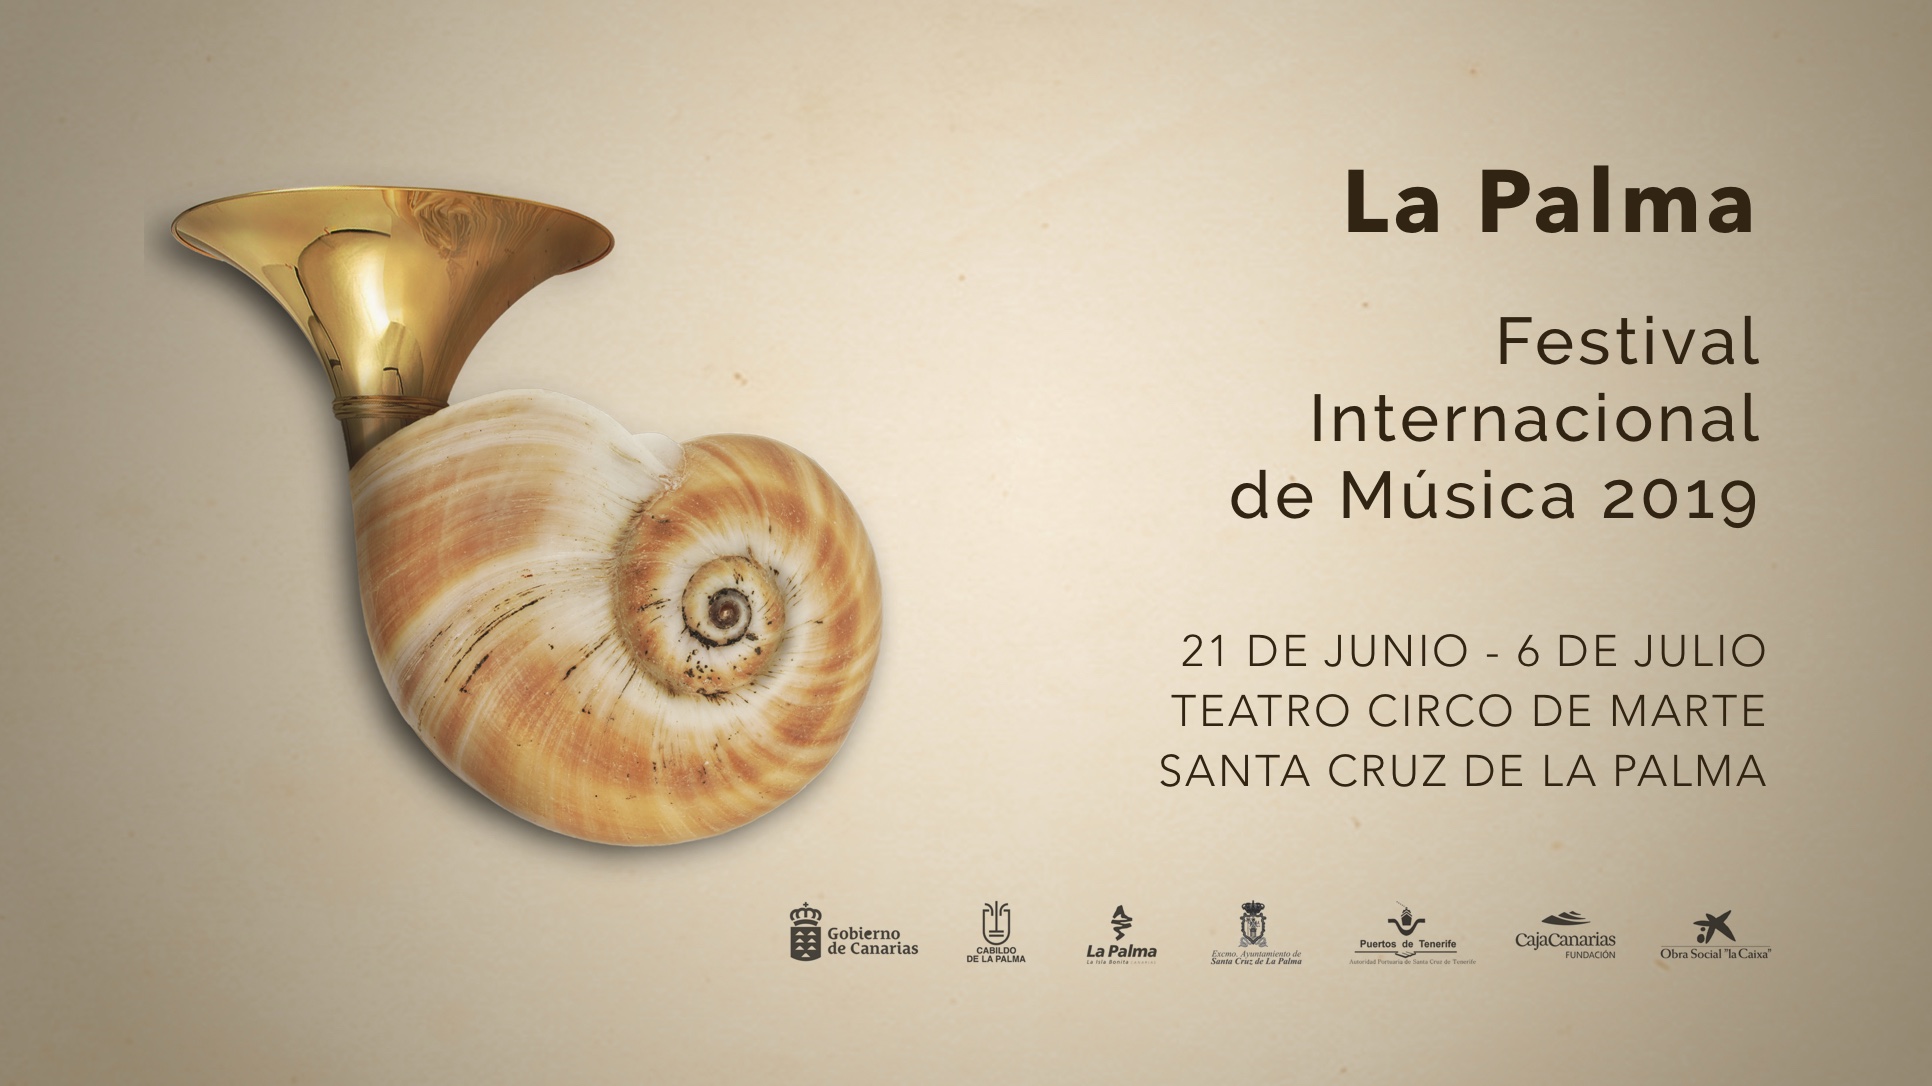 La Palma Festival Internacional de Música